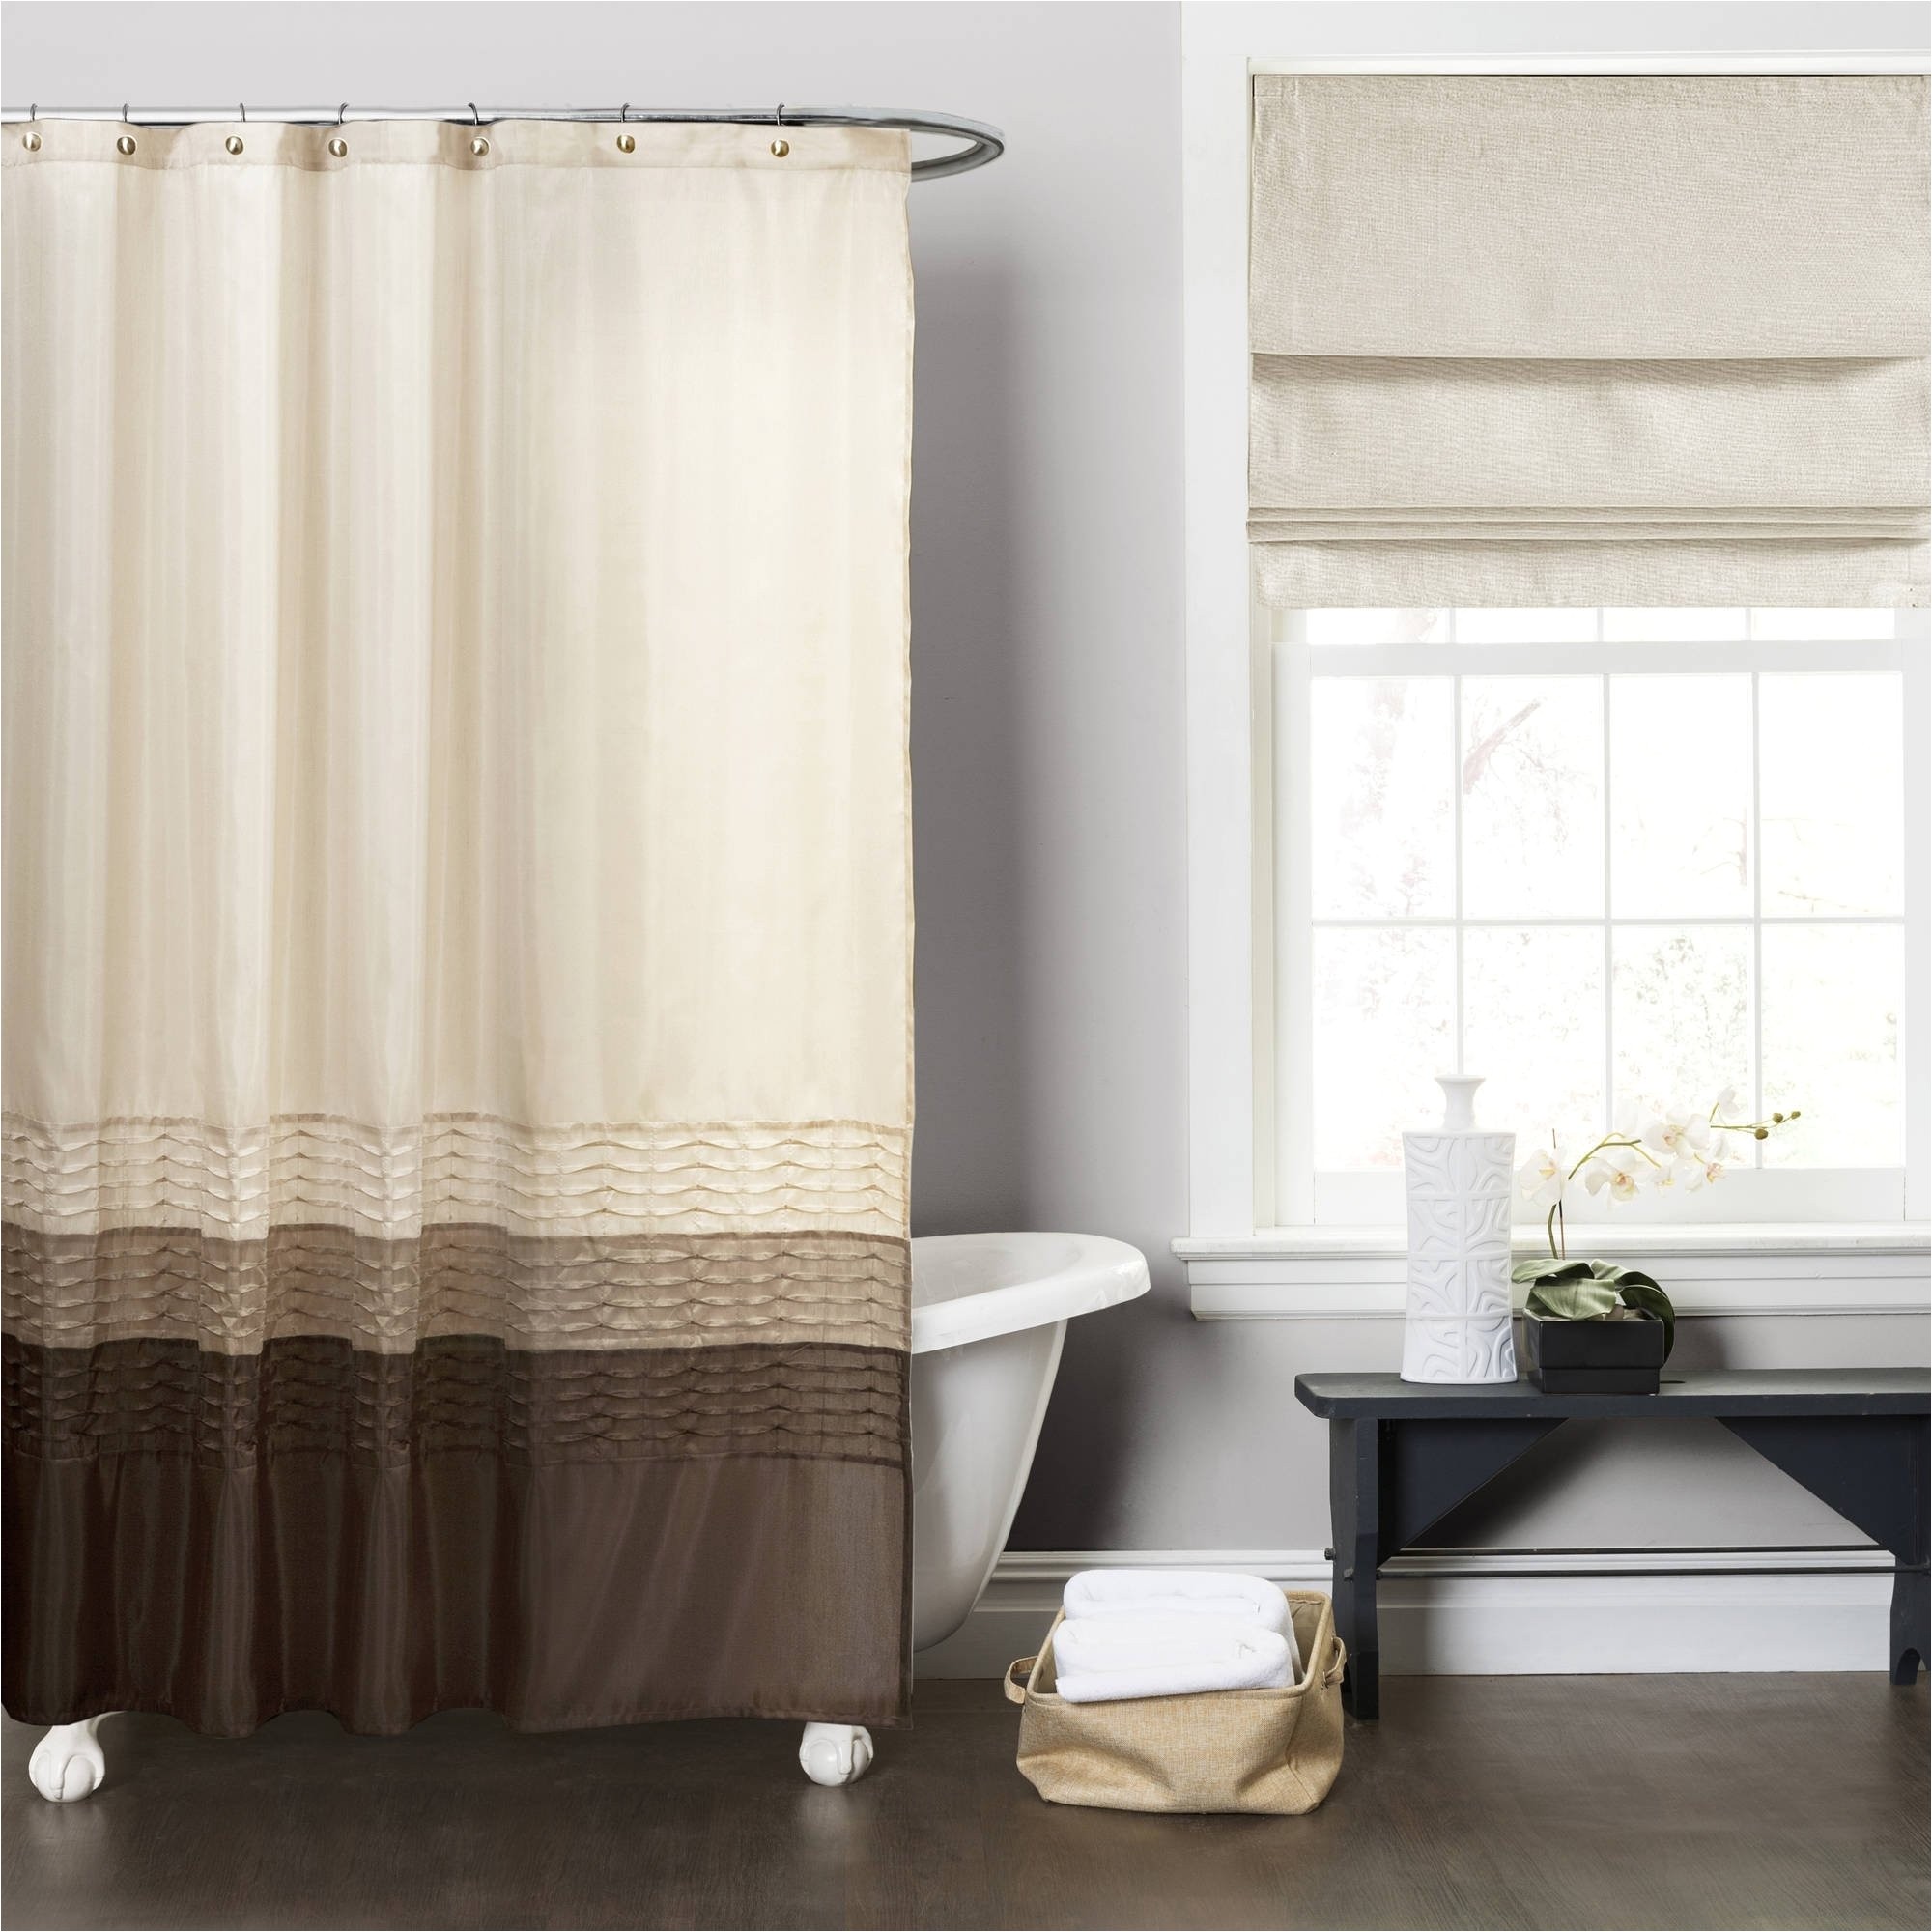 curtain amazing dillards shower curtains bathroom beige lime warm regarding theme dillards fabric shower curtains